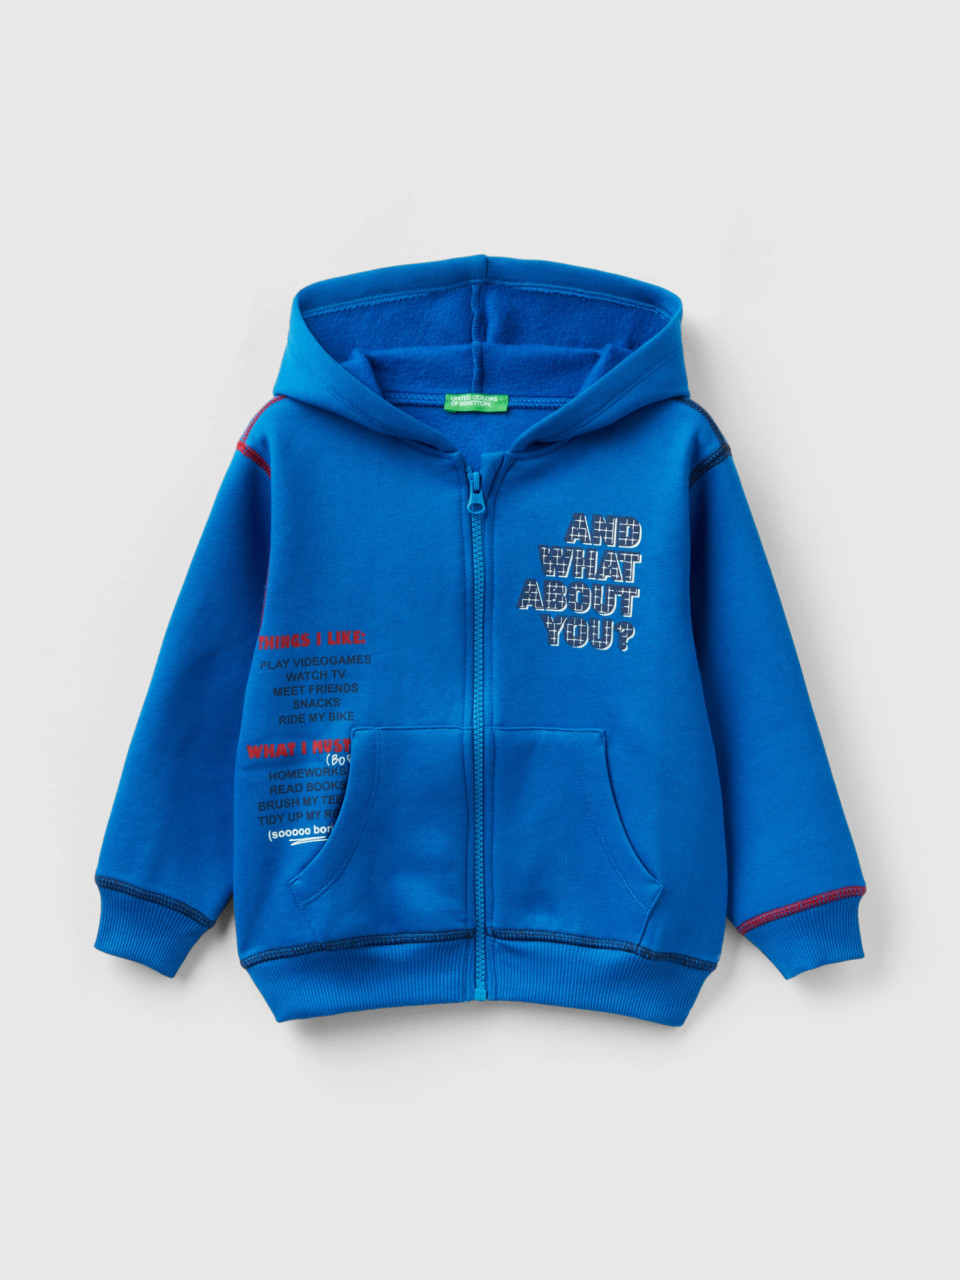 Benetton, Kapuzensweater Over Fit Mit Print, Verkehrsblau, male